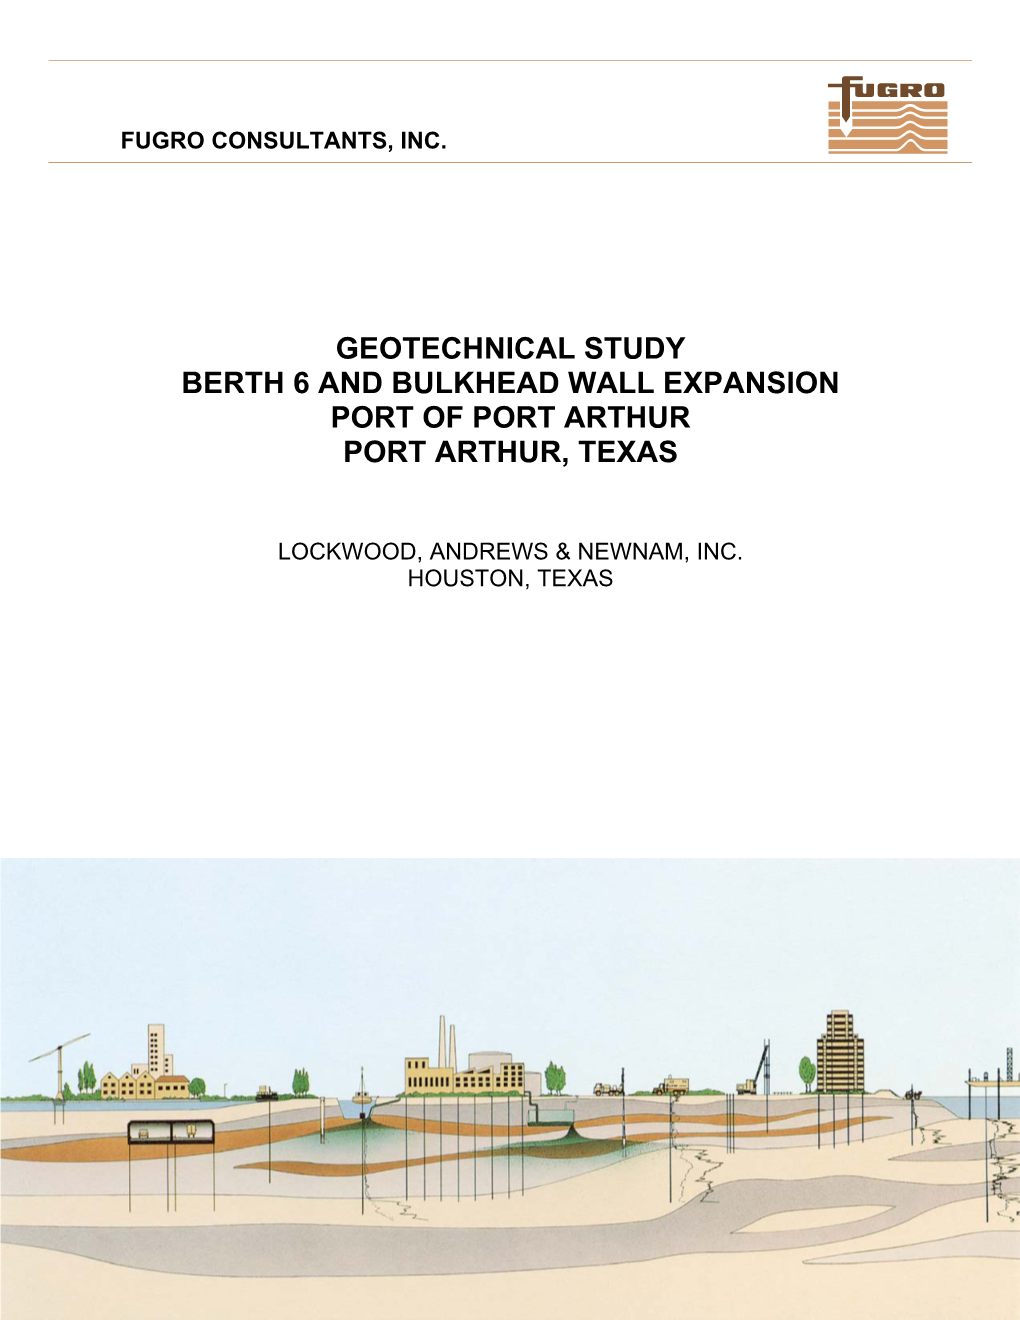 Geotechnical Study Berth 6 and Bulkhead Wall Expansion Port of Port Arthur Port Arthur, Texas